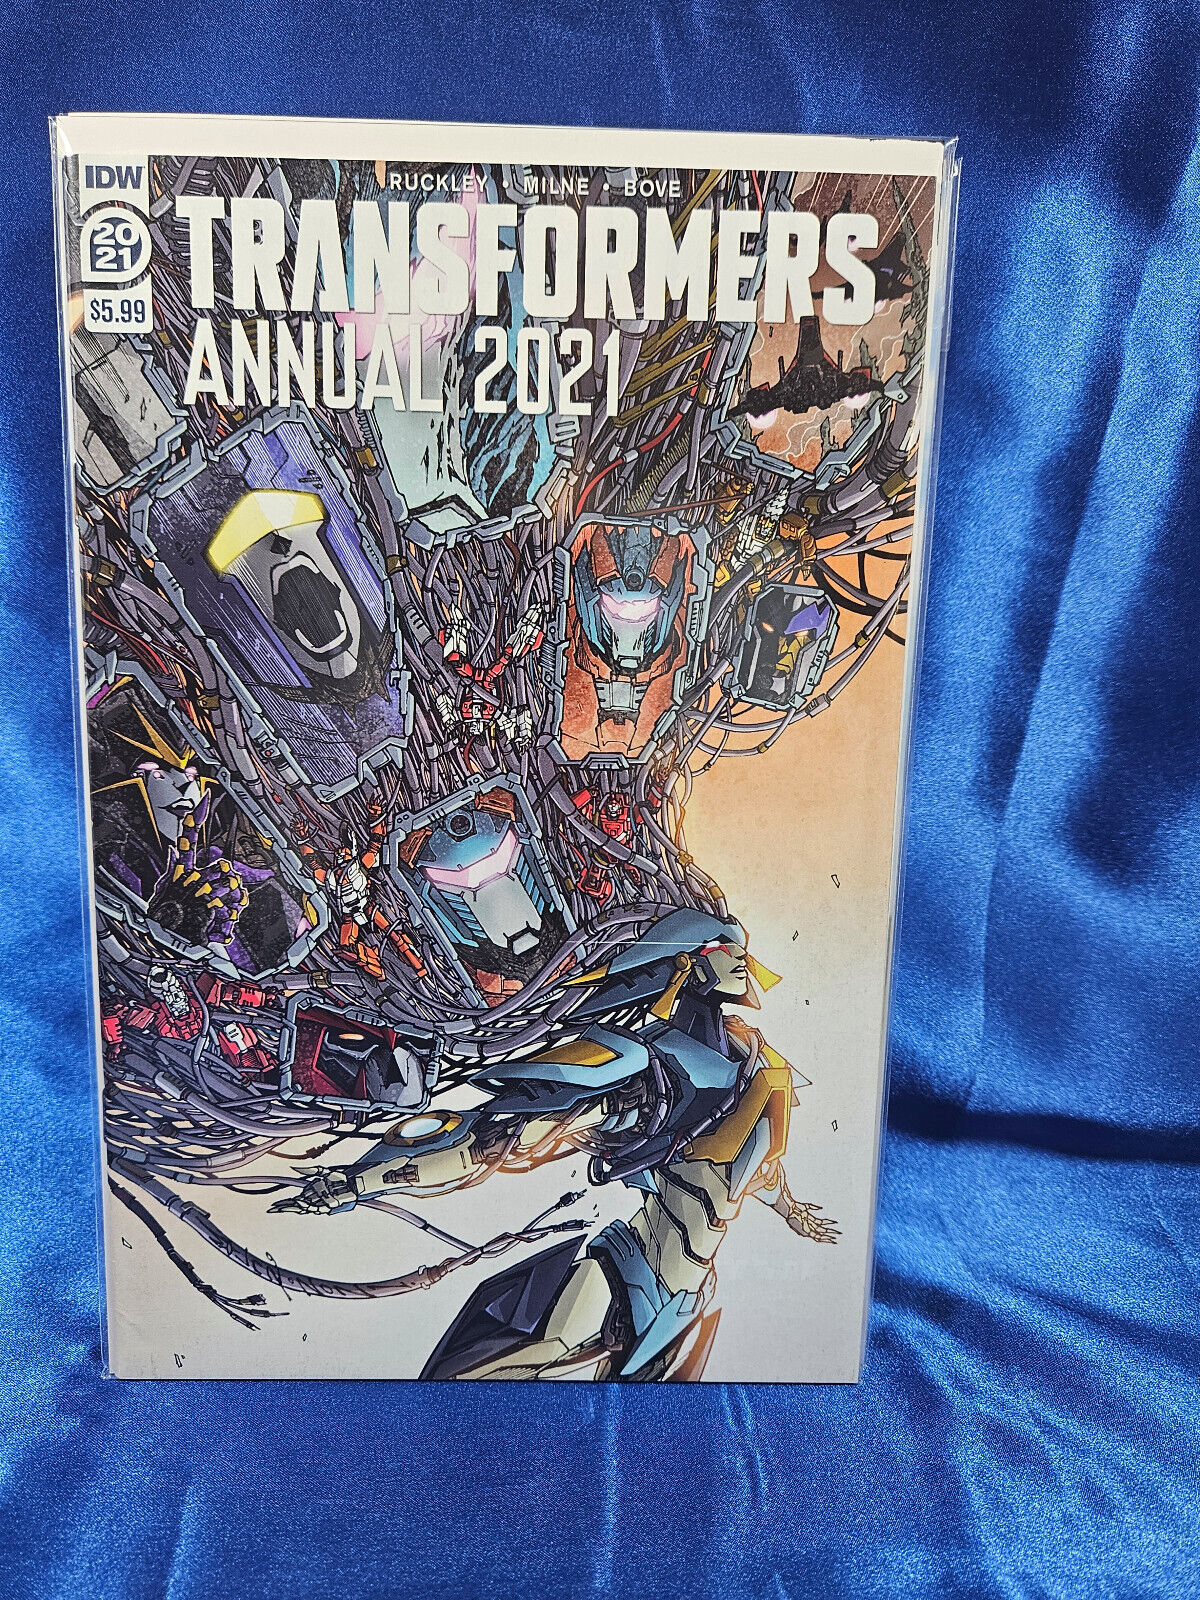 Transformers ANNUAL 2021 IDW Comics 2021 VF/NM 9.0